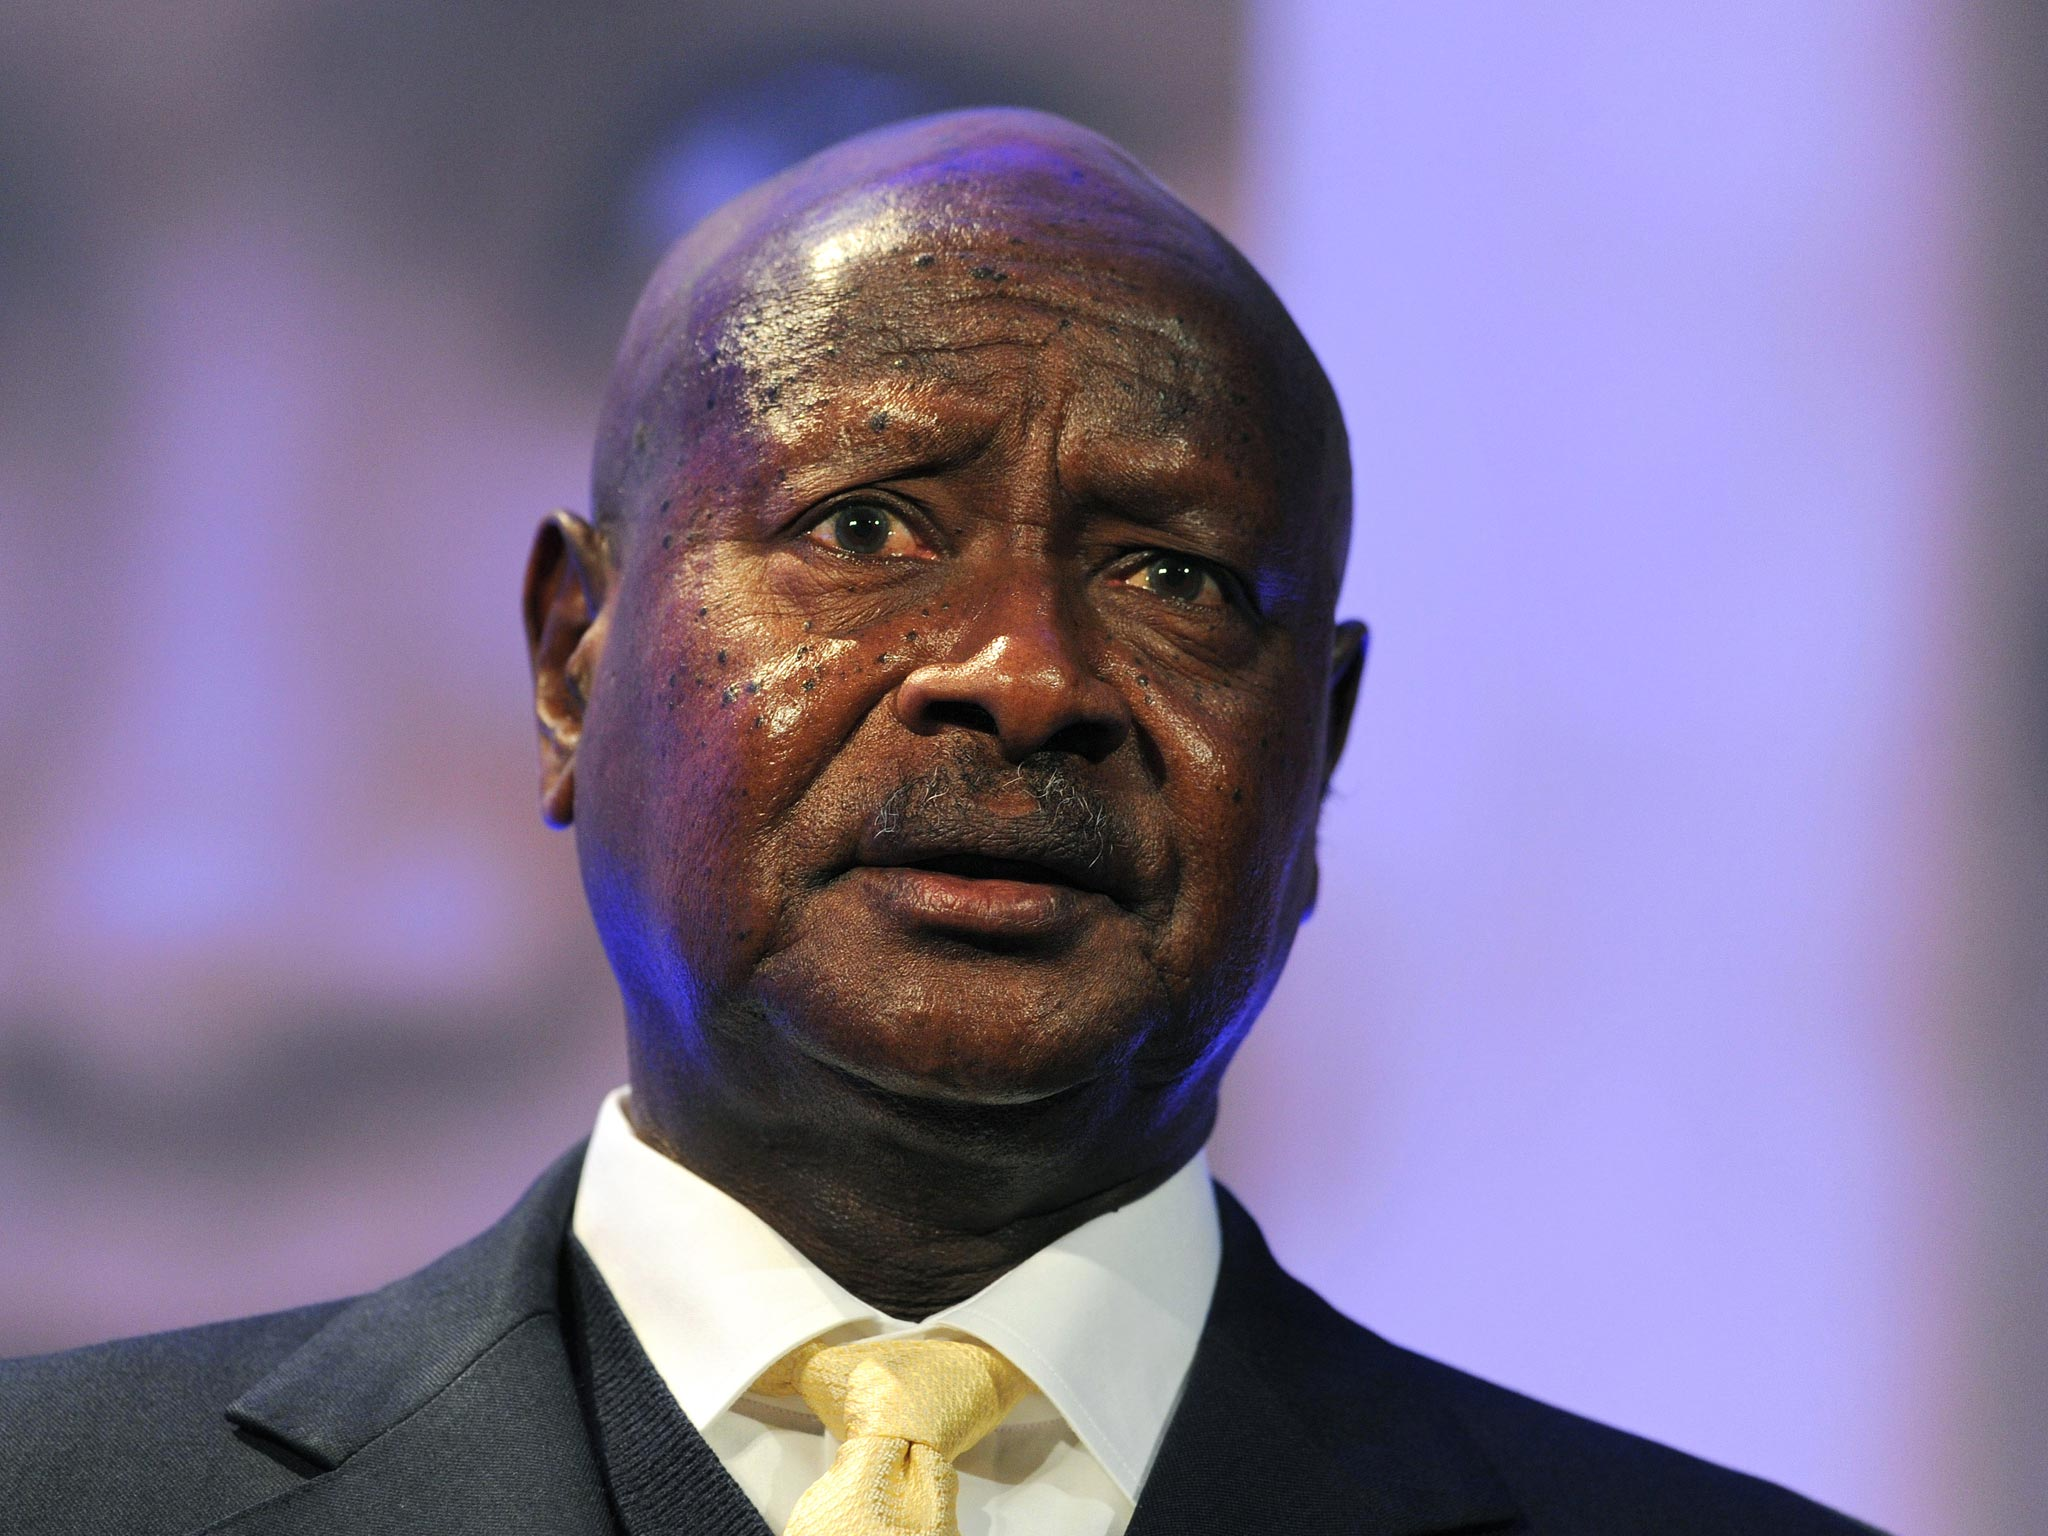 Ugandan President Yoweri Museveni said Africans need to "stop sleeping and work"